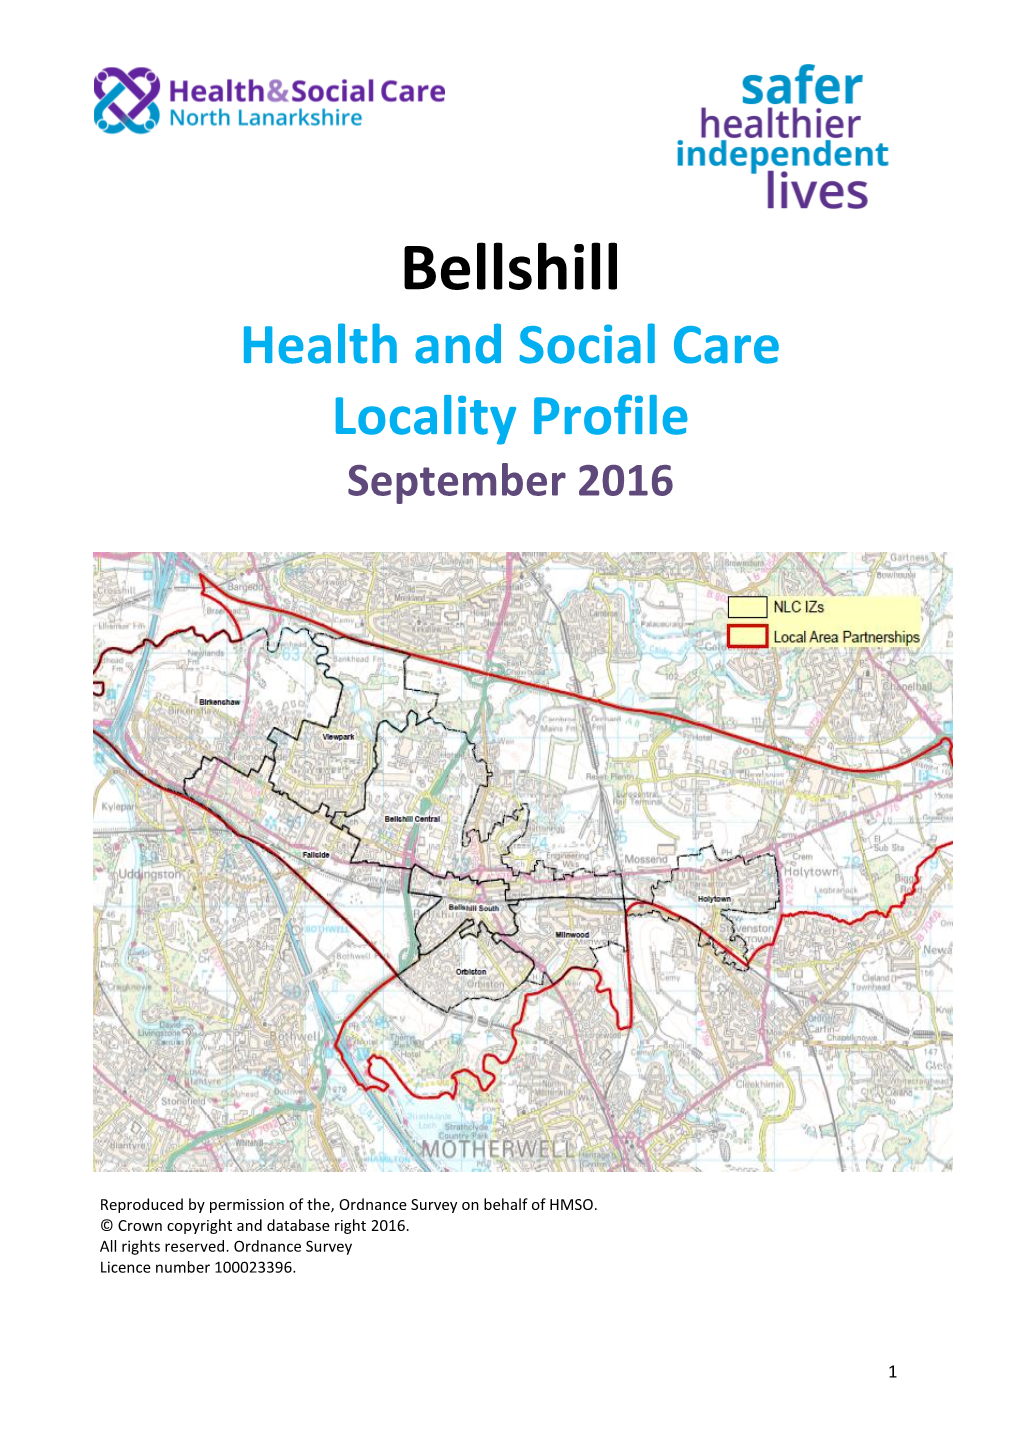 Bellshill Locality Profile